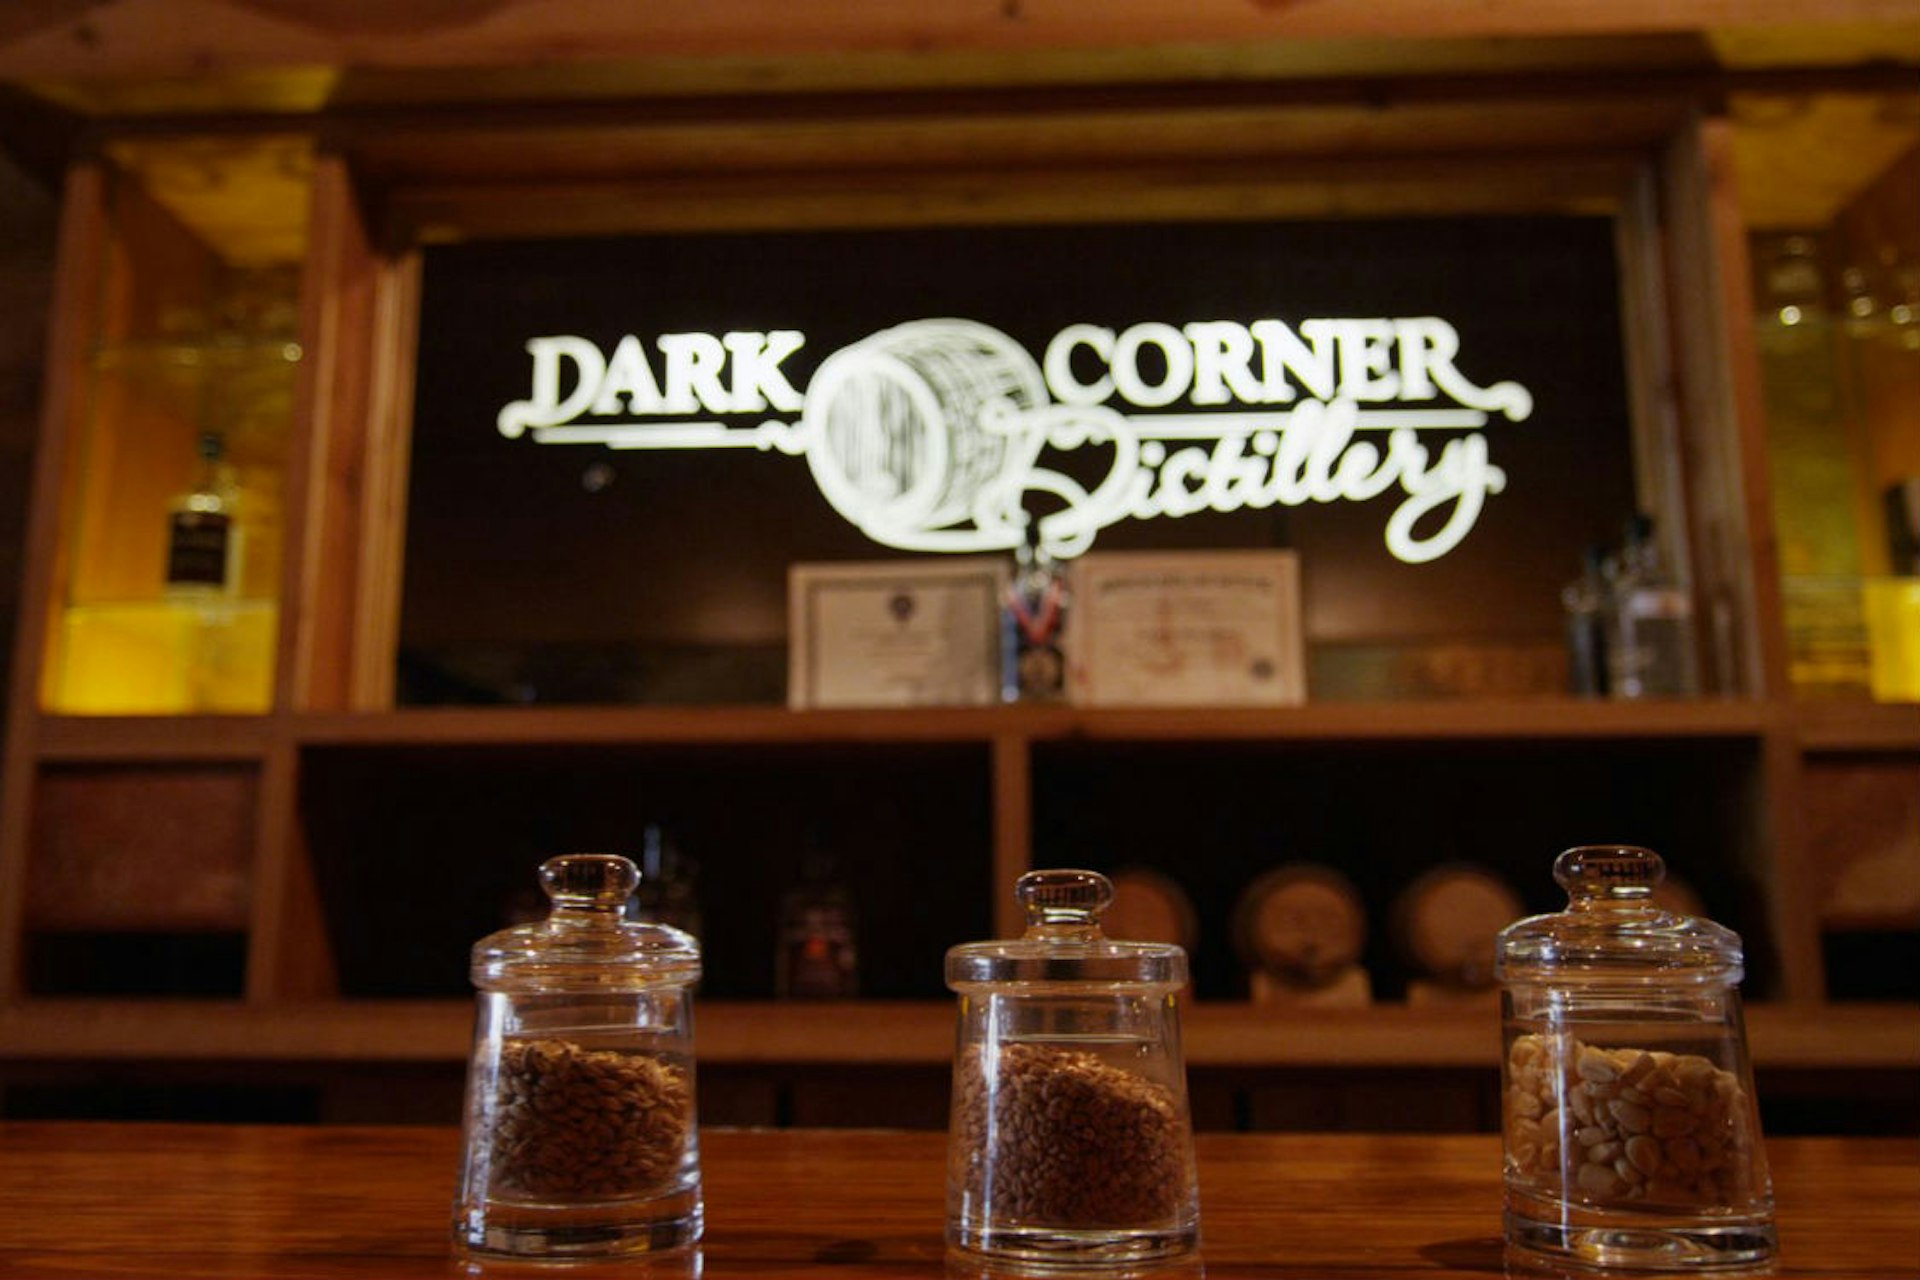 Inside Dark Corner Distillery. Image courtesy of Dark Corner Distillery / VisitGreenvilleSC.